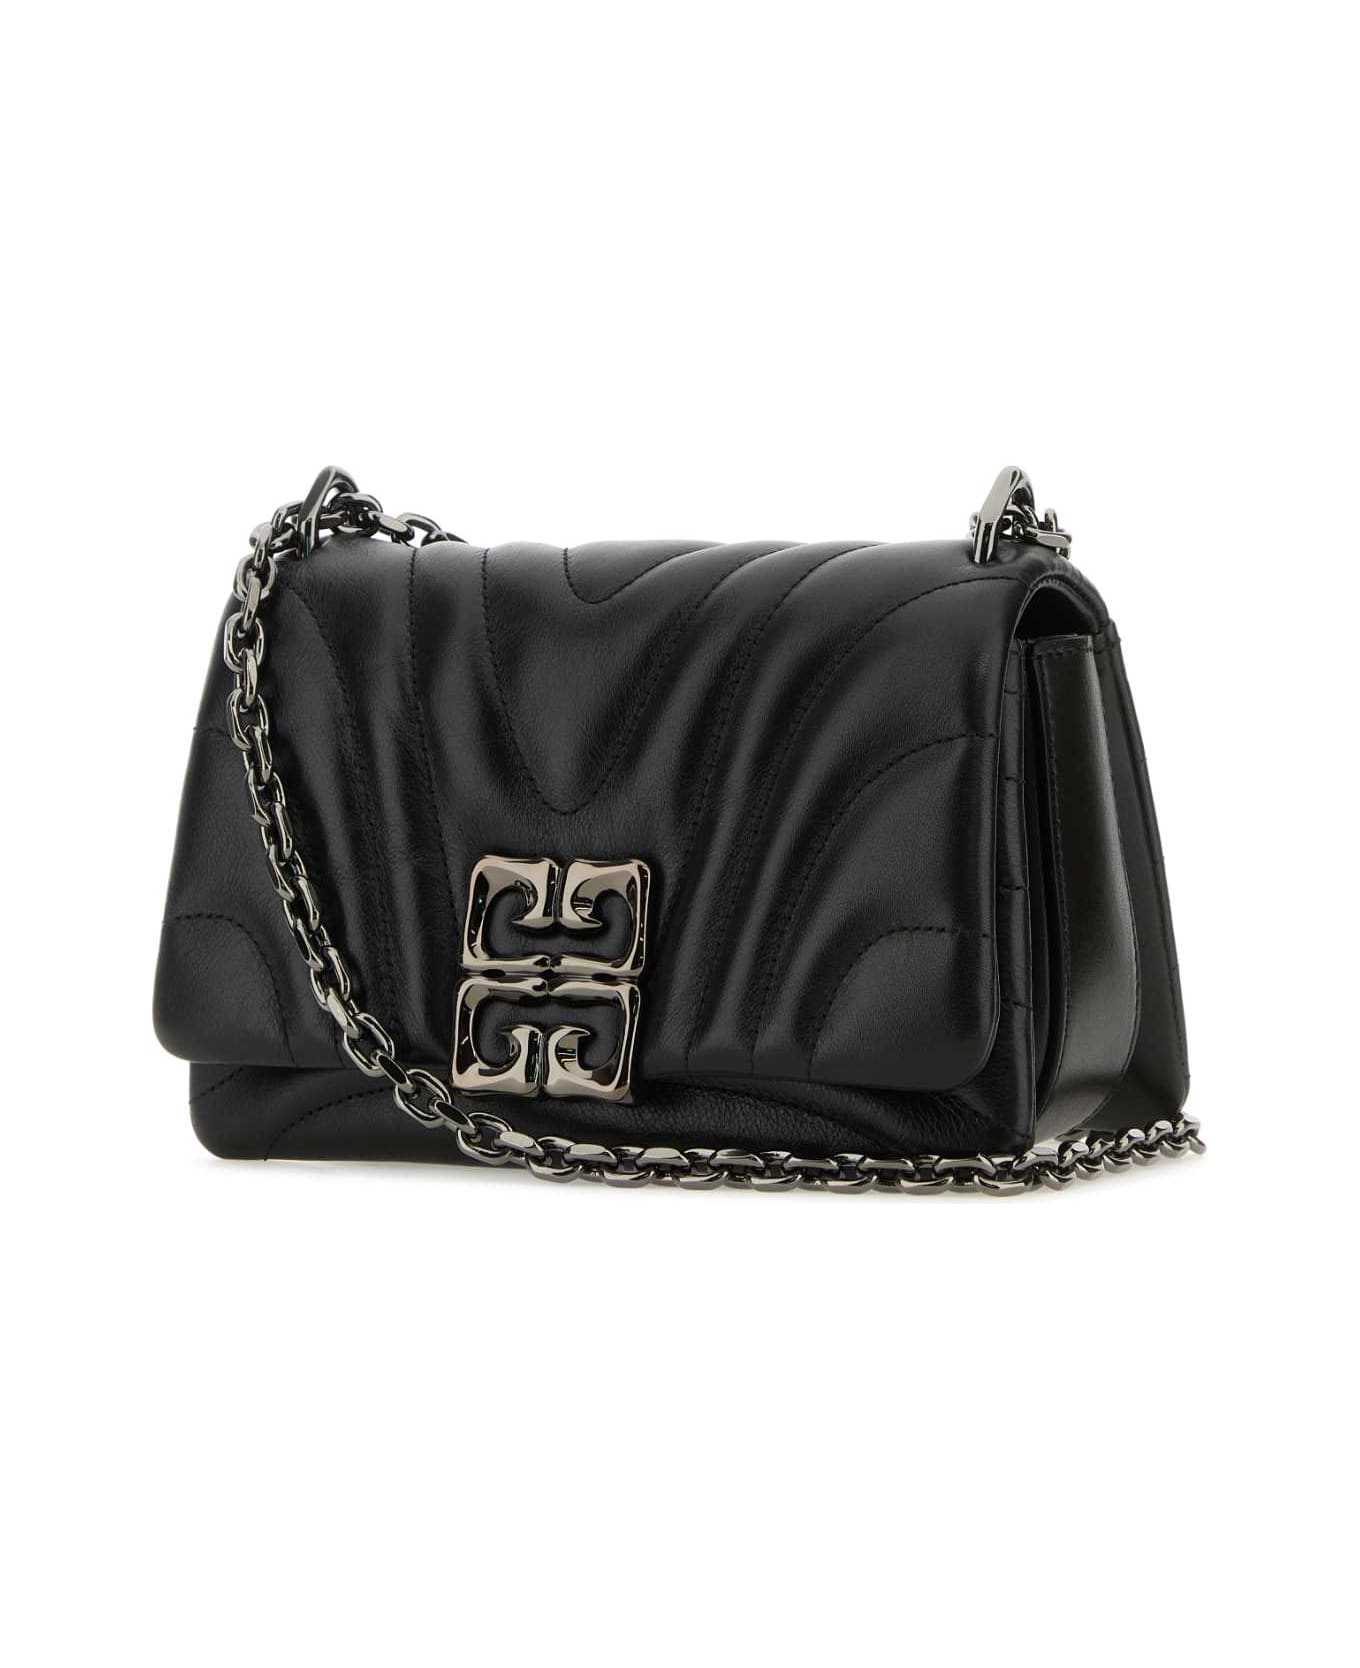 Givenchy Black Leather Small 4g Soft Shoulder Bag - Black ショルダーバッグ